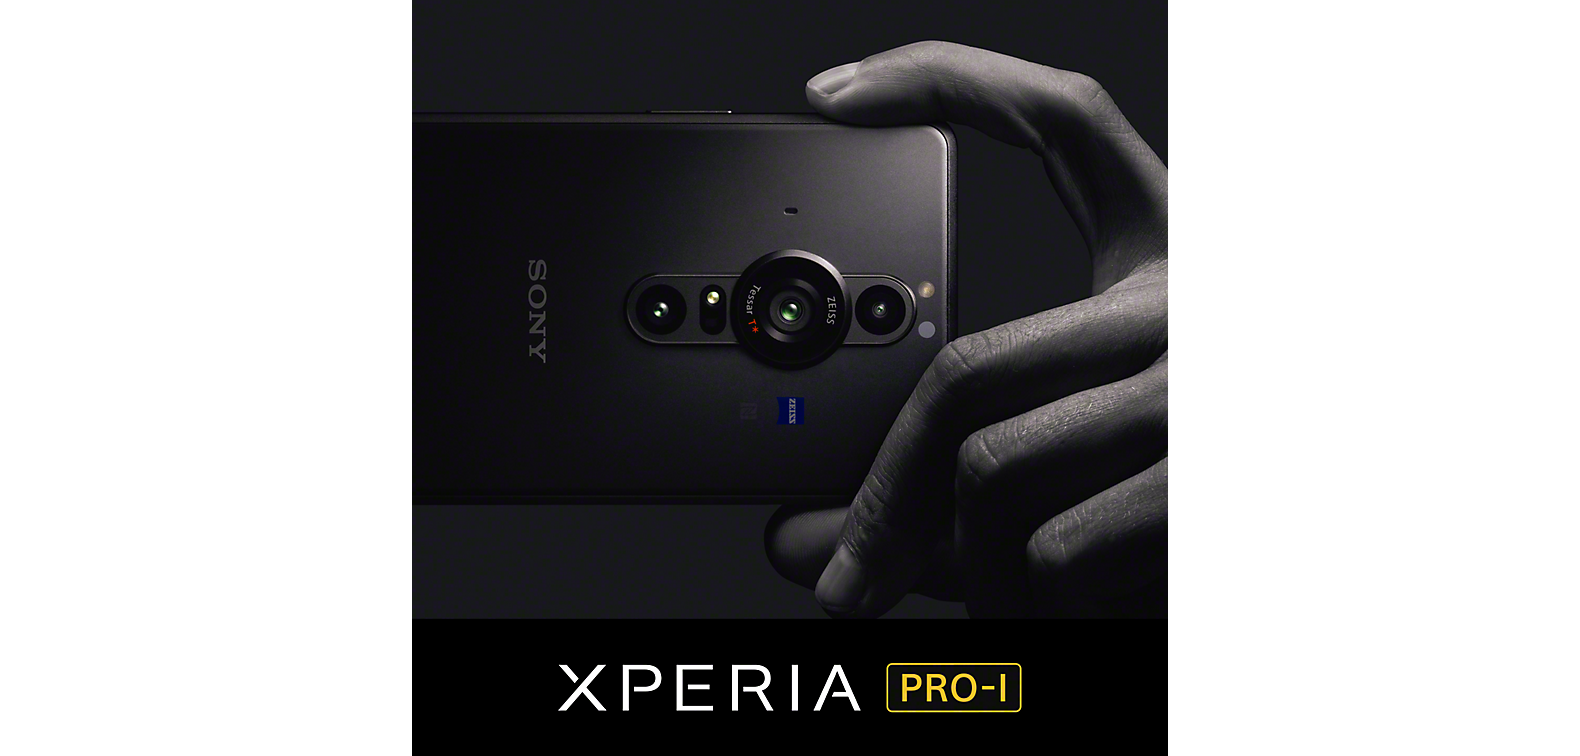 Рука, держащая черный смартфон Xperia PRO-I, над логотипом Xperia PRO-I.